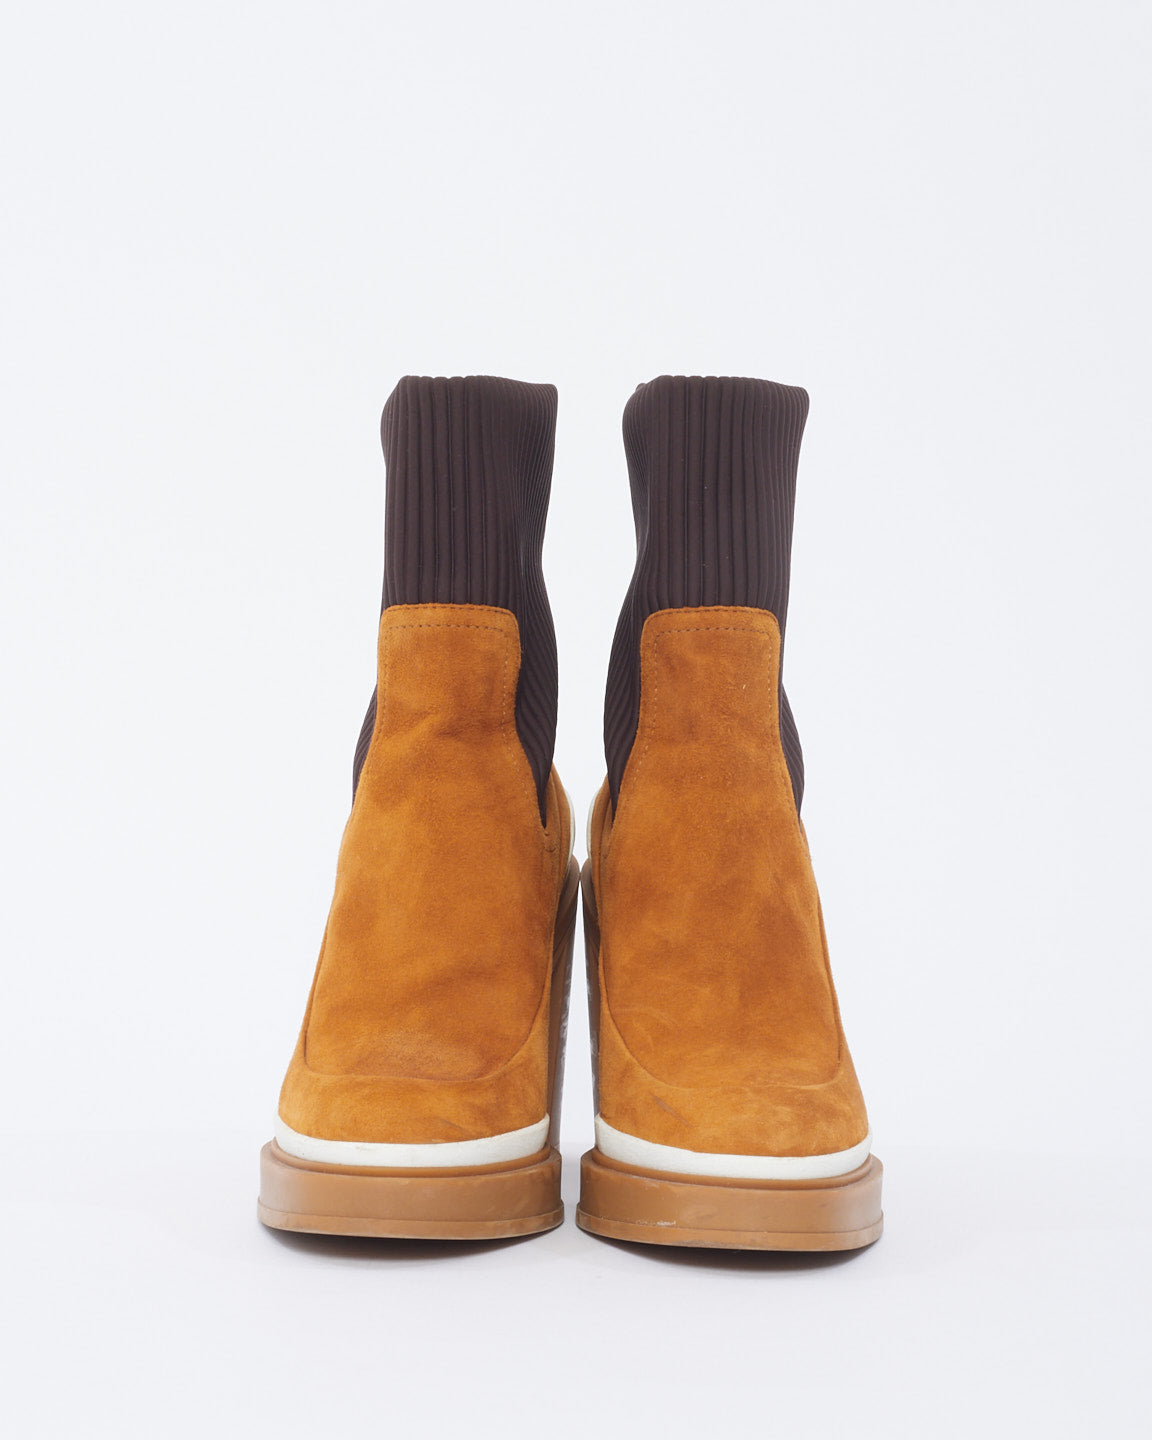 Hermès Tan Suede Vandal Ankle Boots - 40